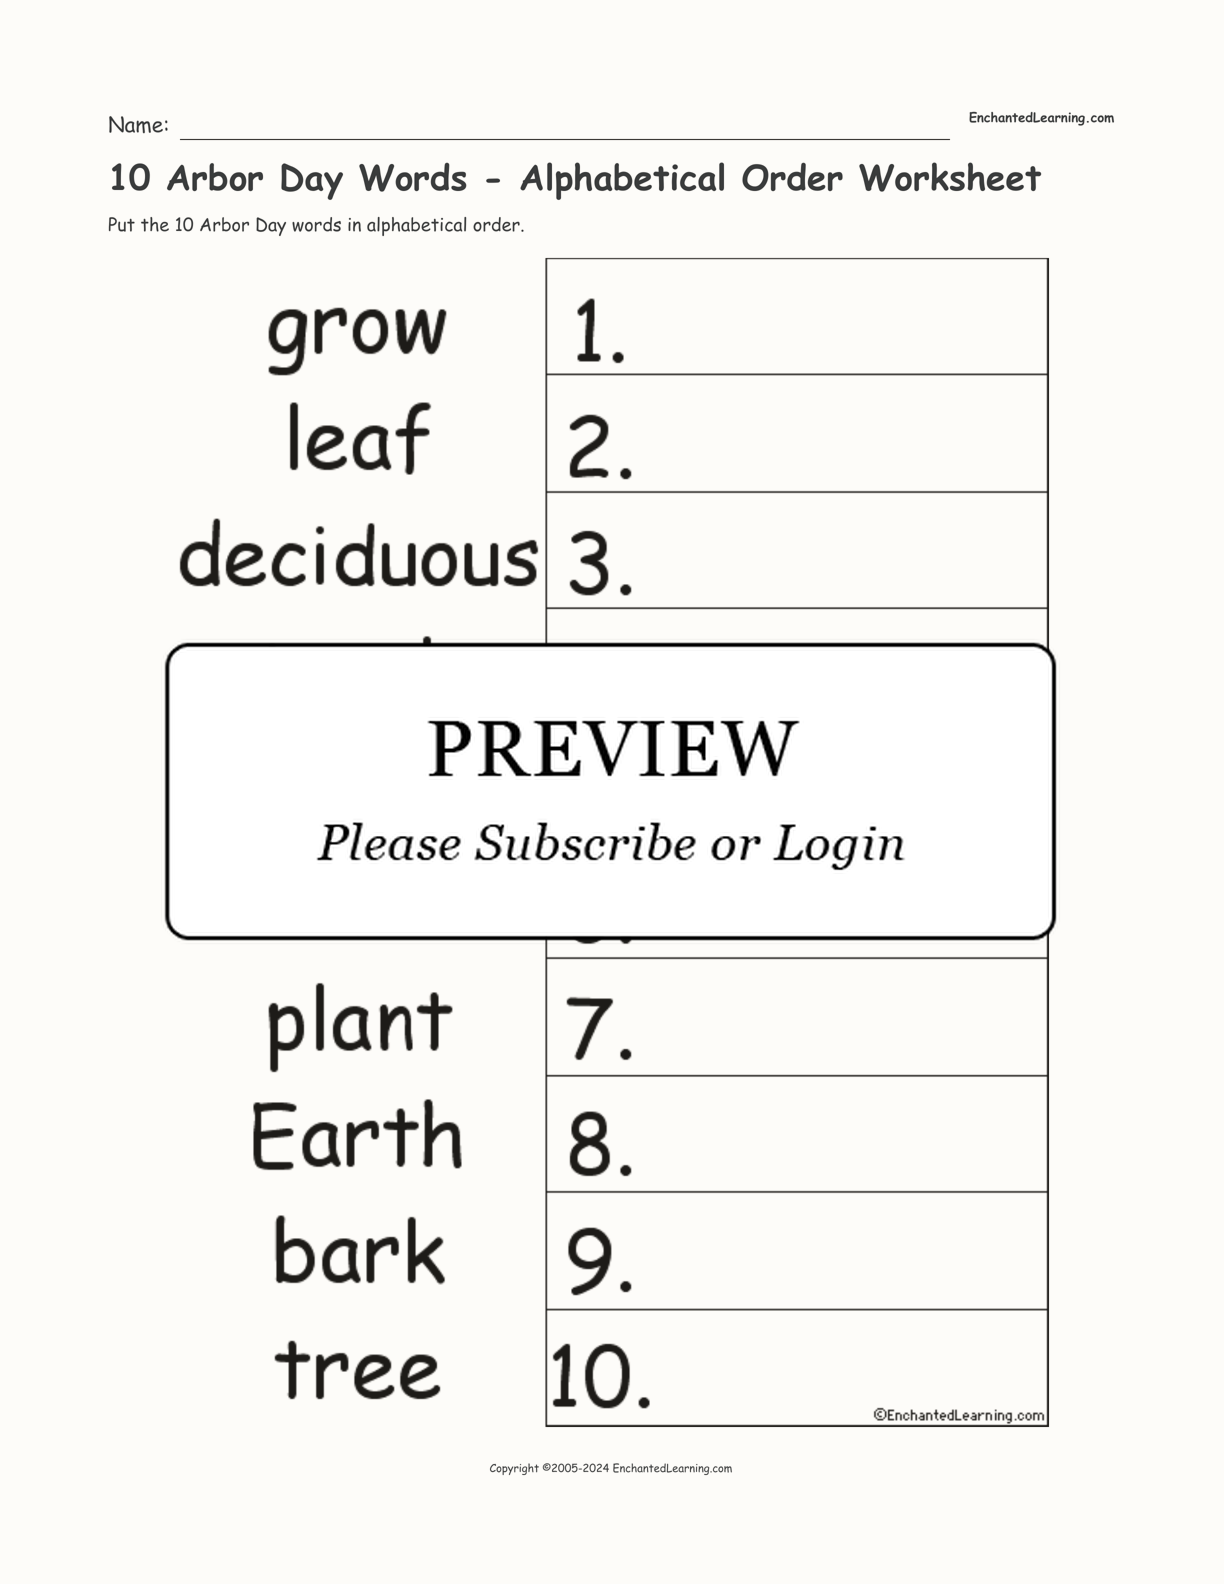 10 Arbor Day Words - Alphabetical Order Worksheet interactive worksheet page 1